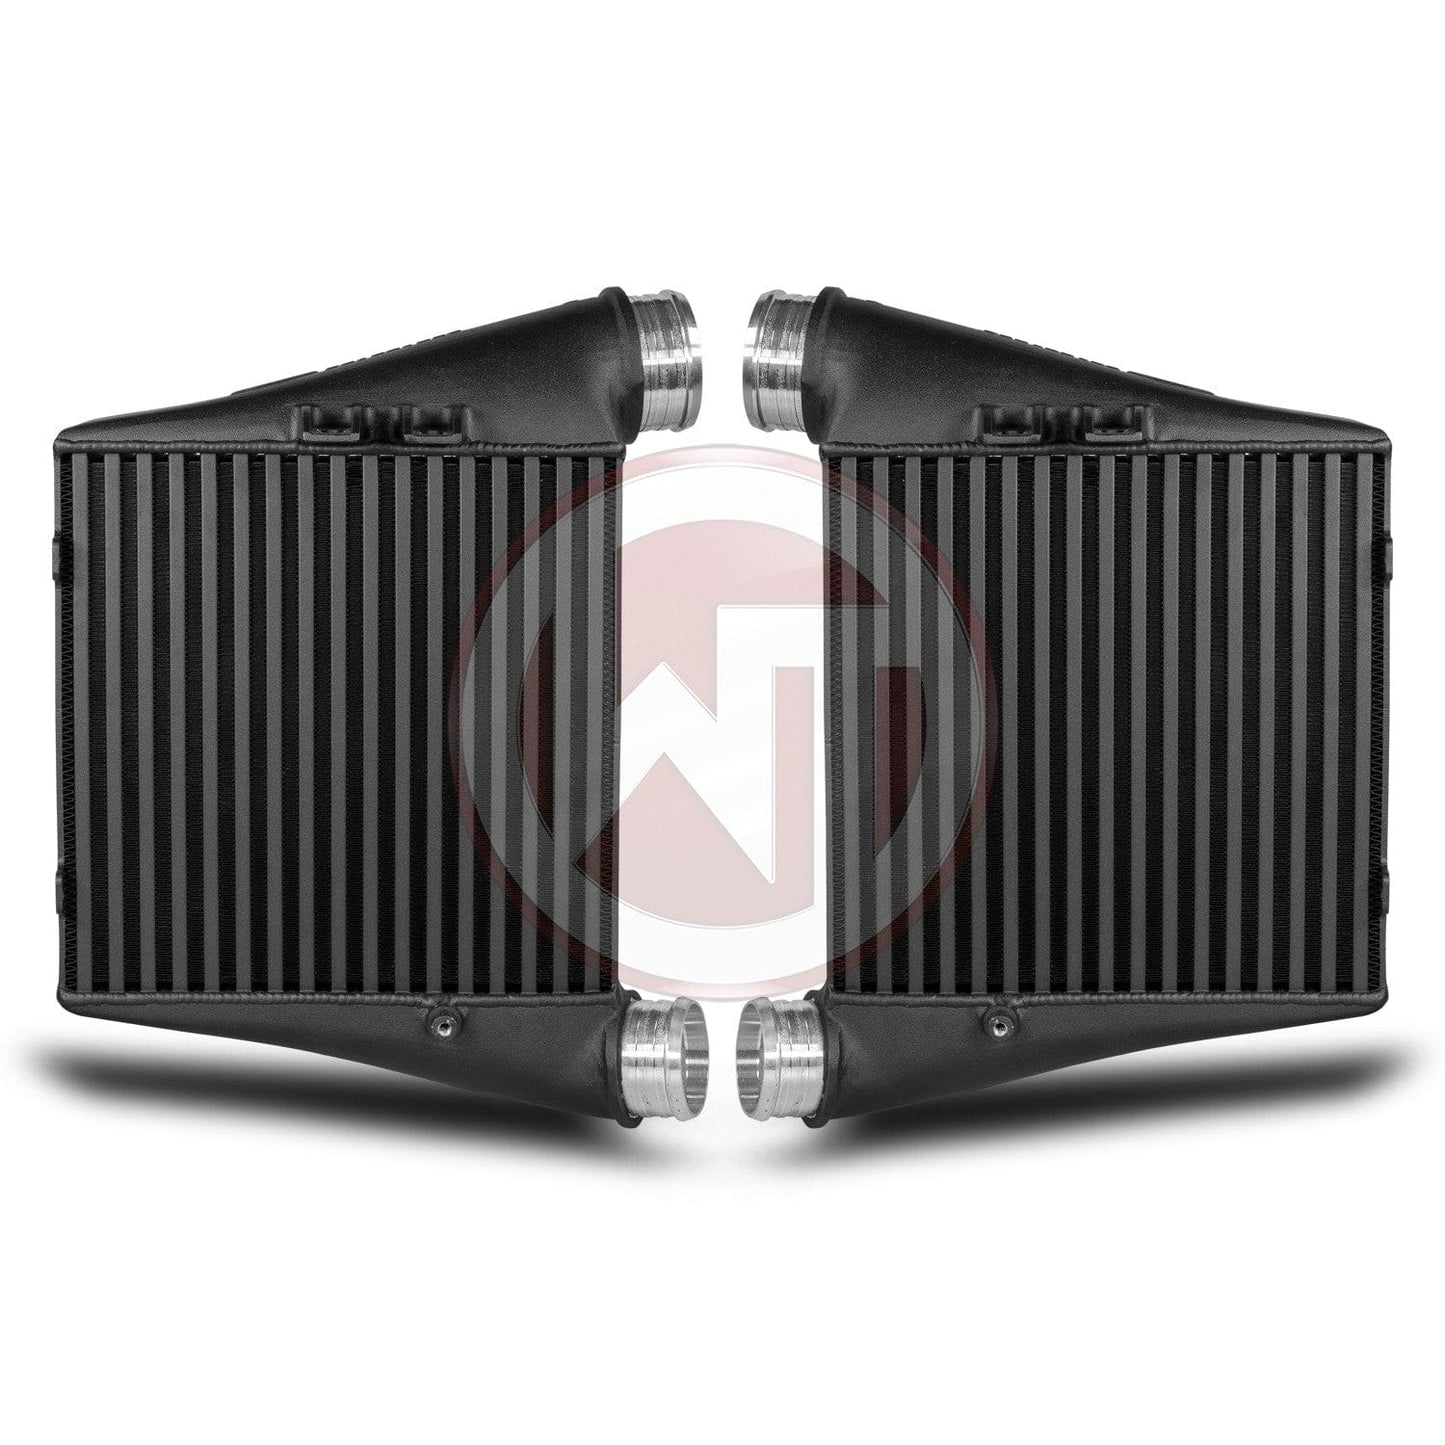 Wagner Audi B5 RS4 Gen2 Competition Intercooler Kit